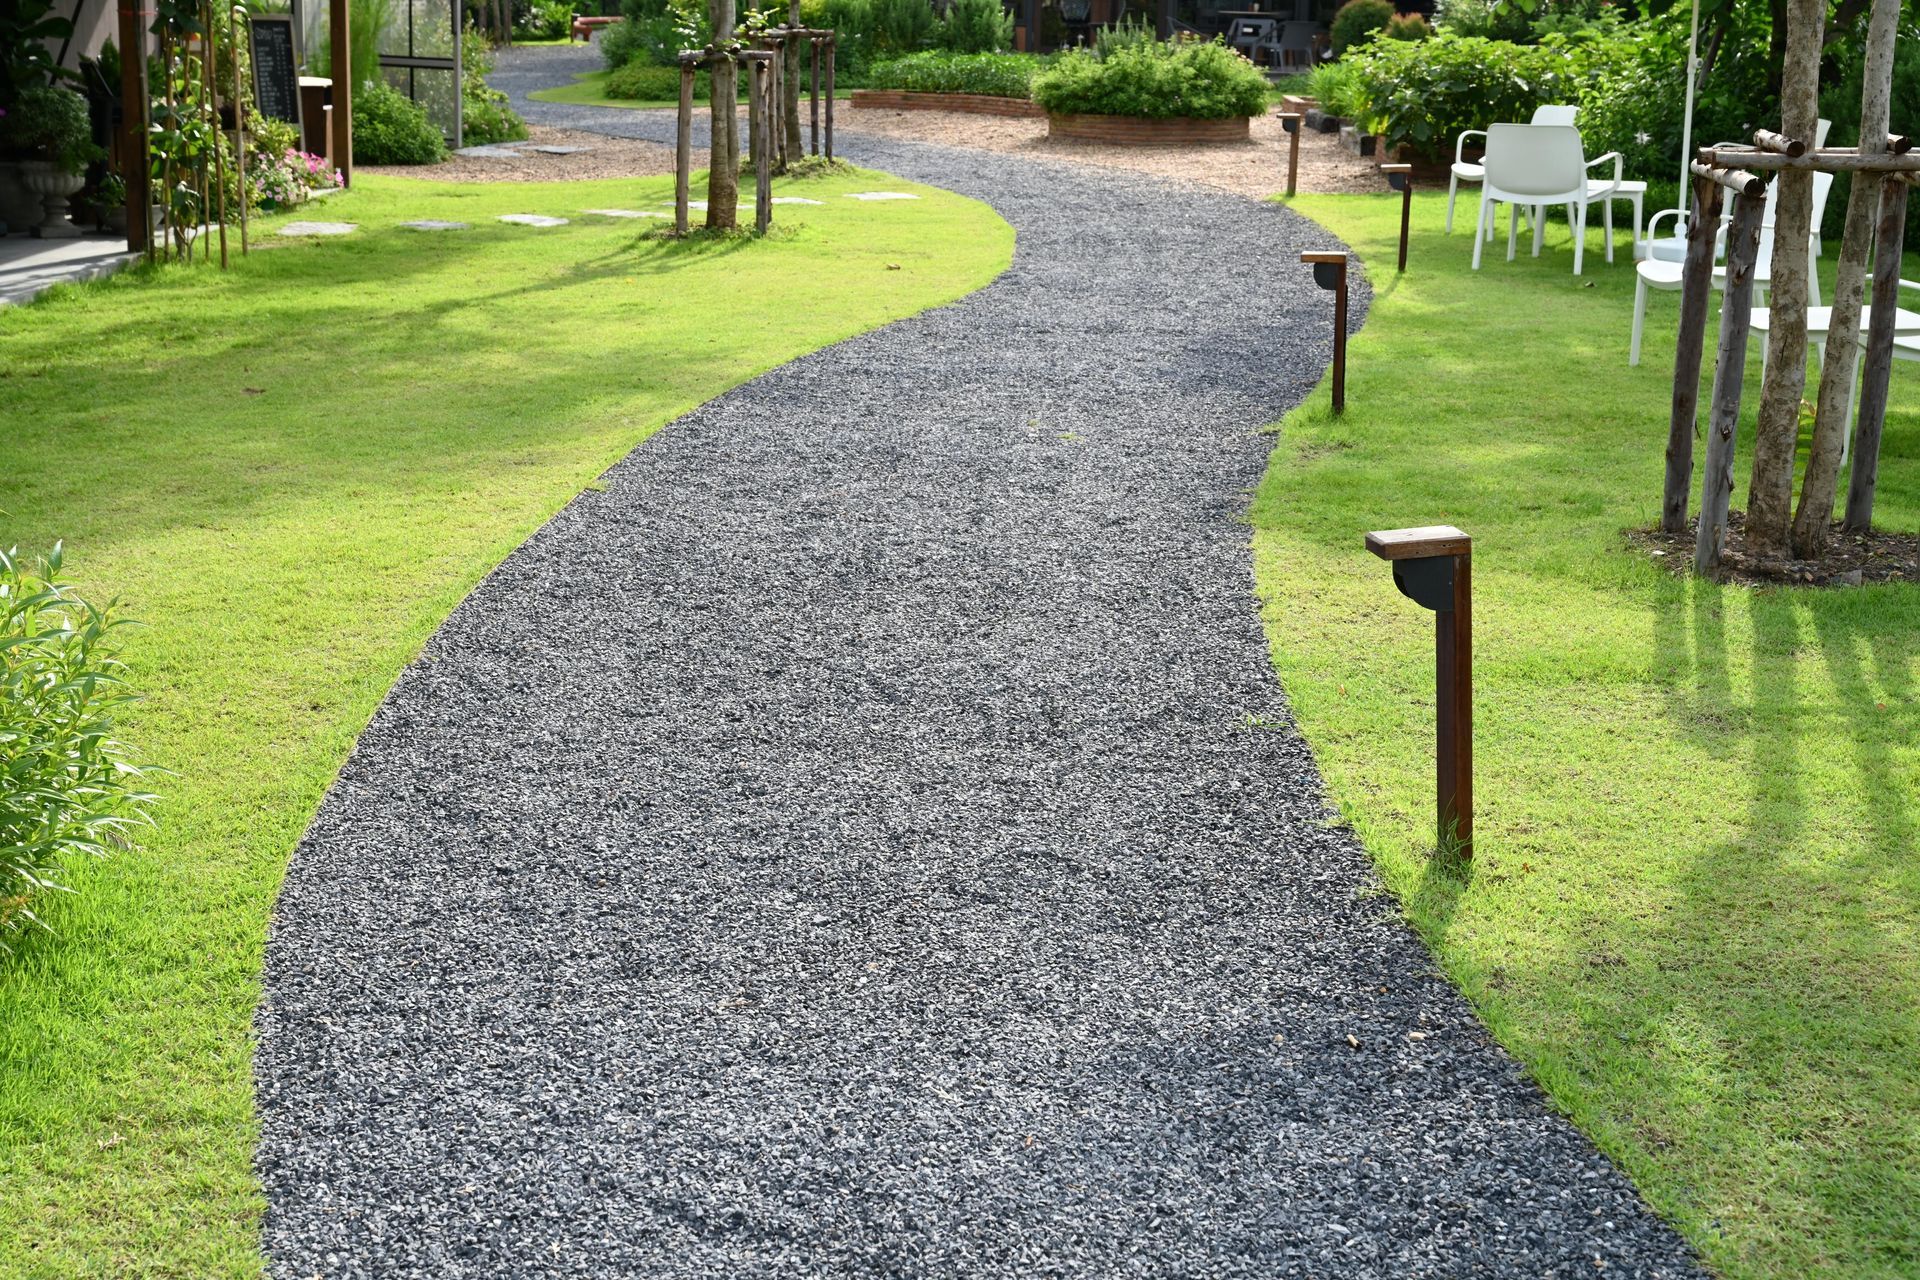 a gravel path winds through a lush green garden .